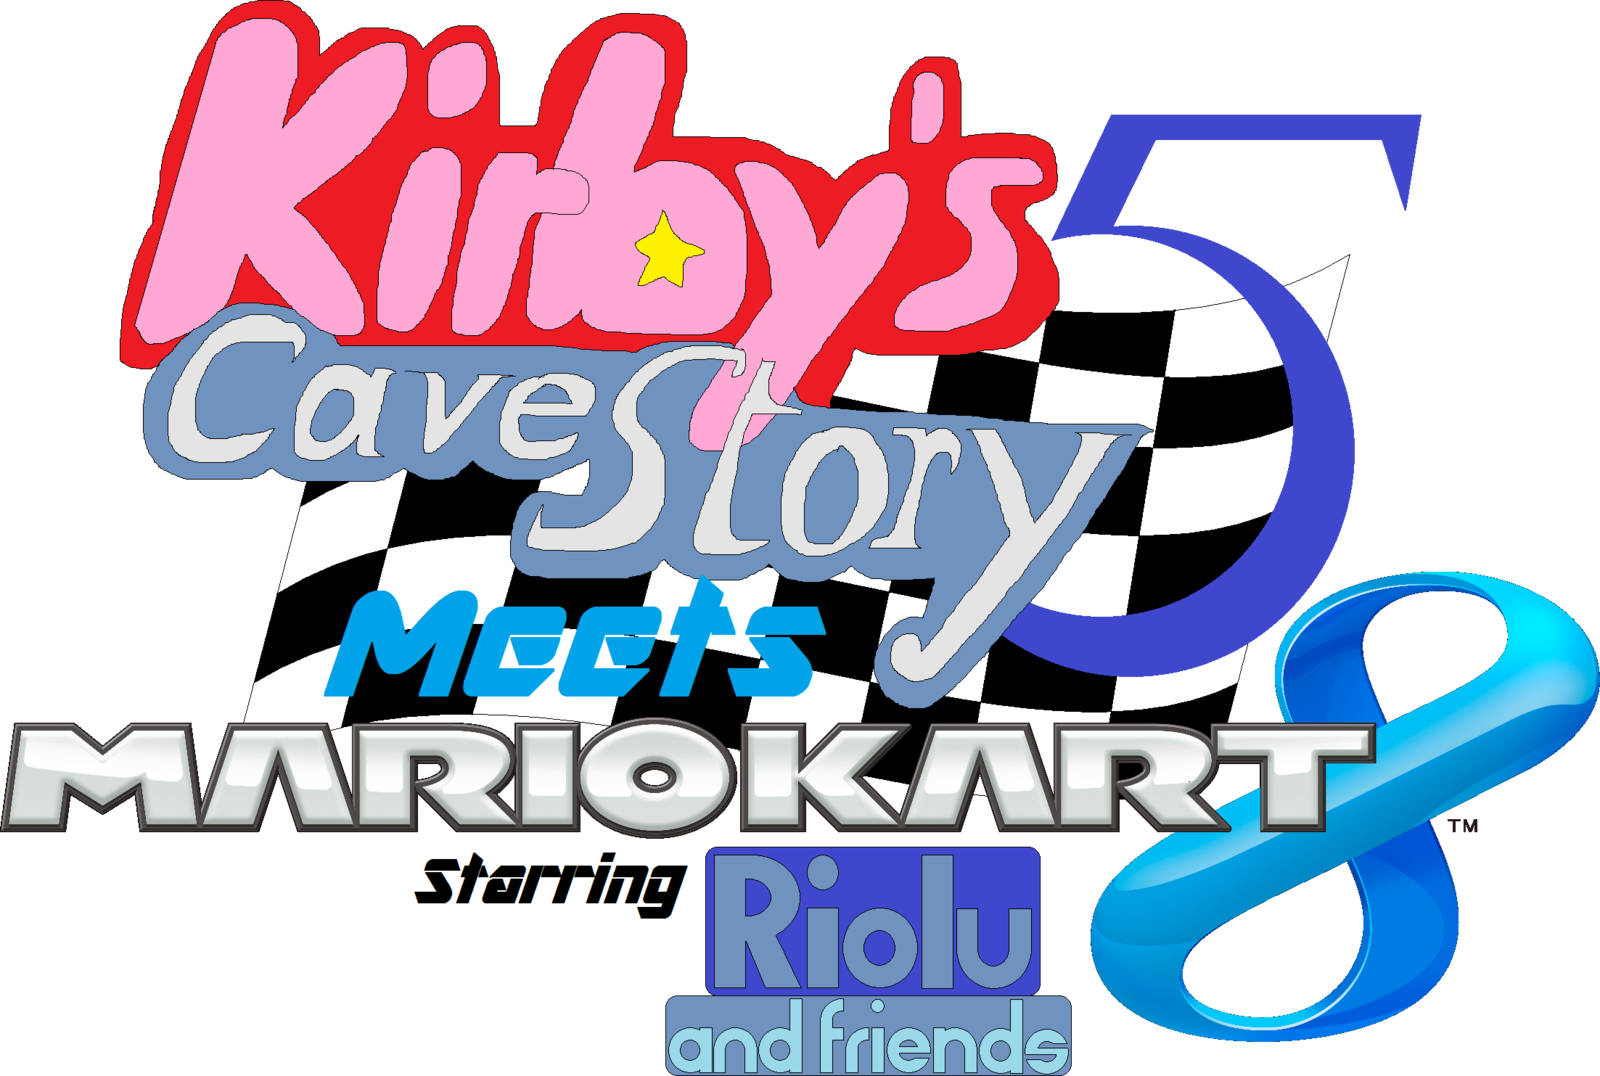 Kirby's Cave Story 5 Meets Mario Kart 8 Logo By Bluecatriolu - Mario K...